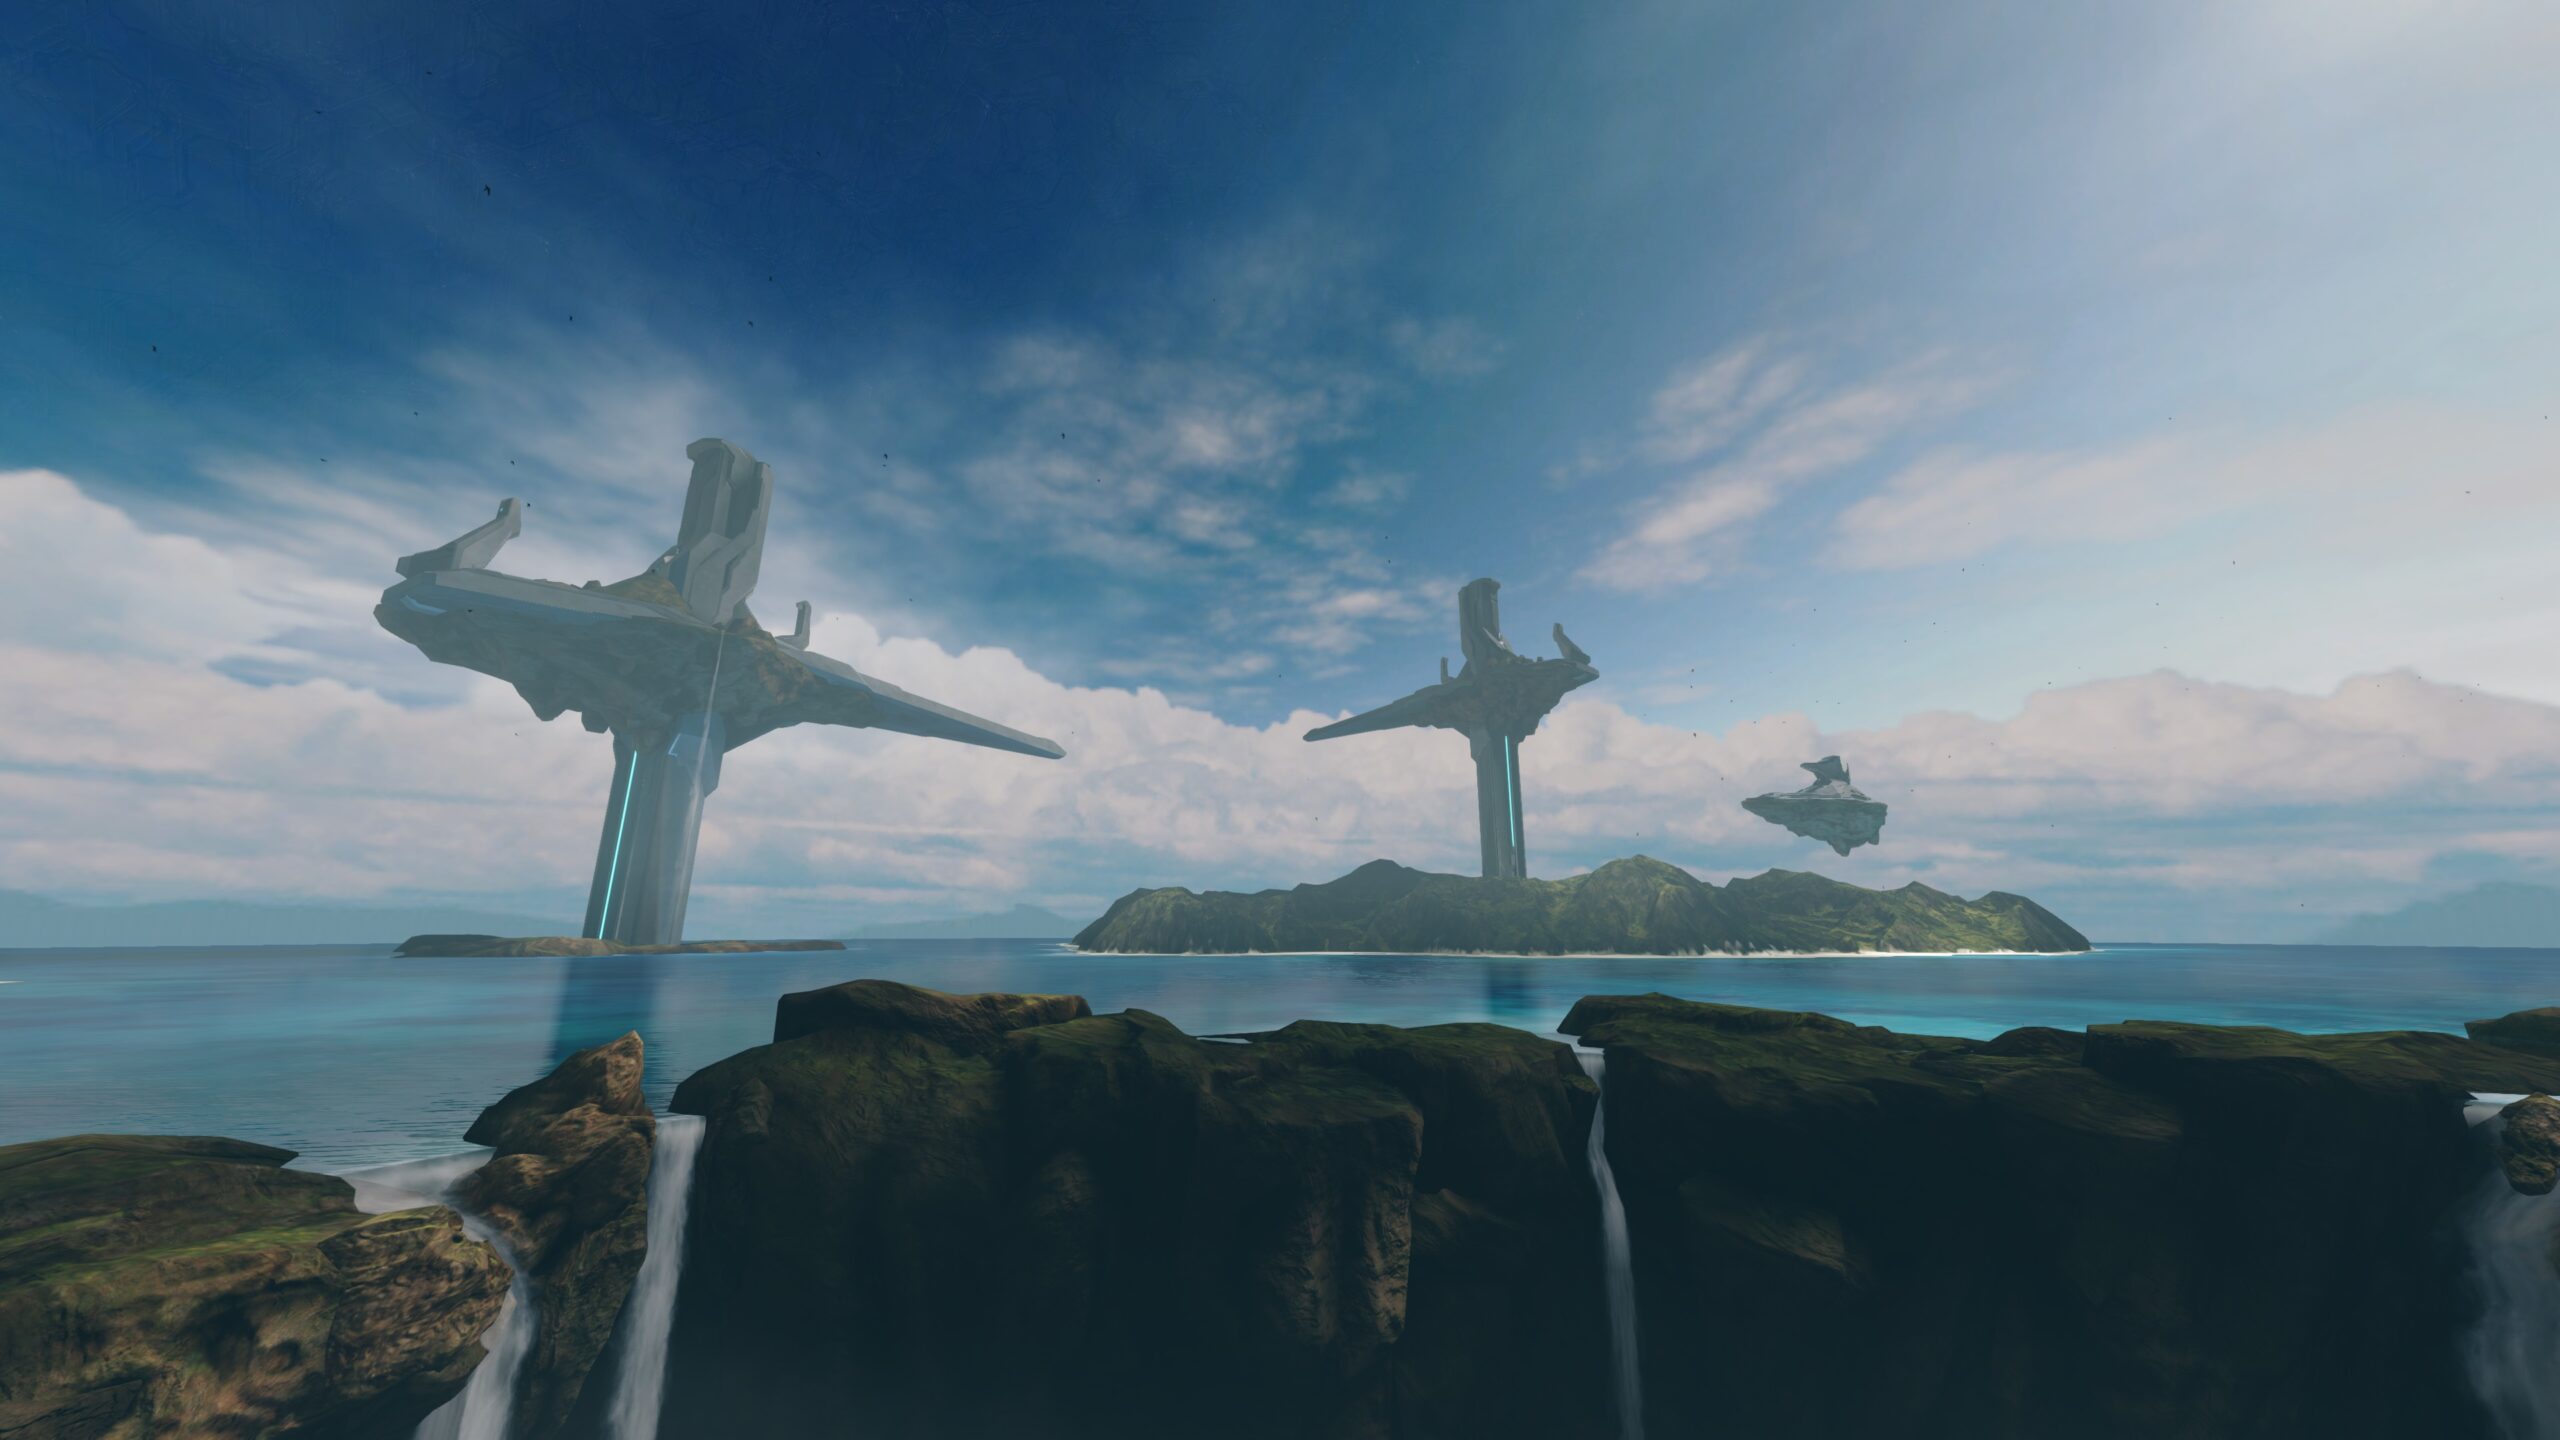 Halo 4 Spartan Ops in-game screenshot of Requiem's Apex vista